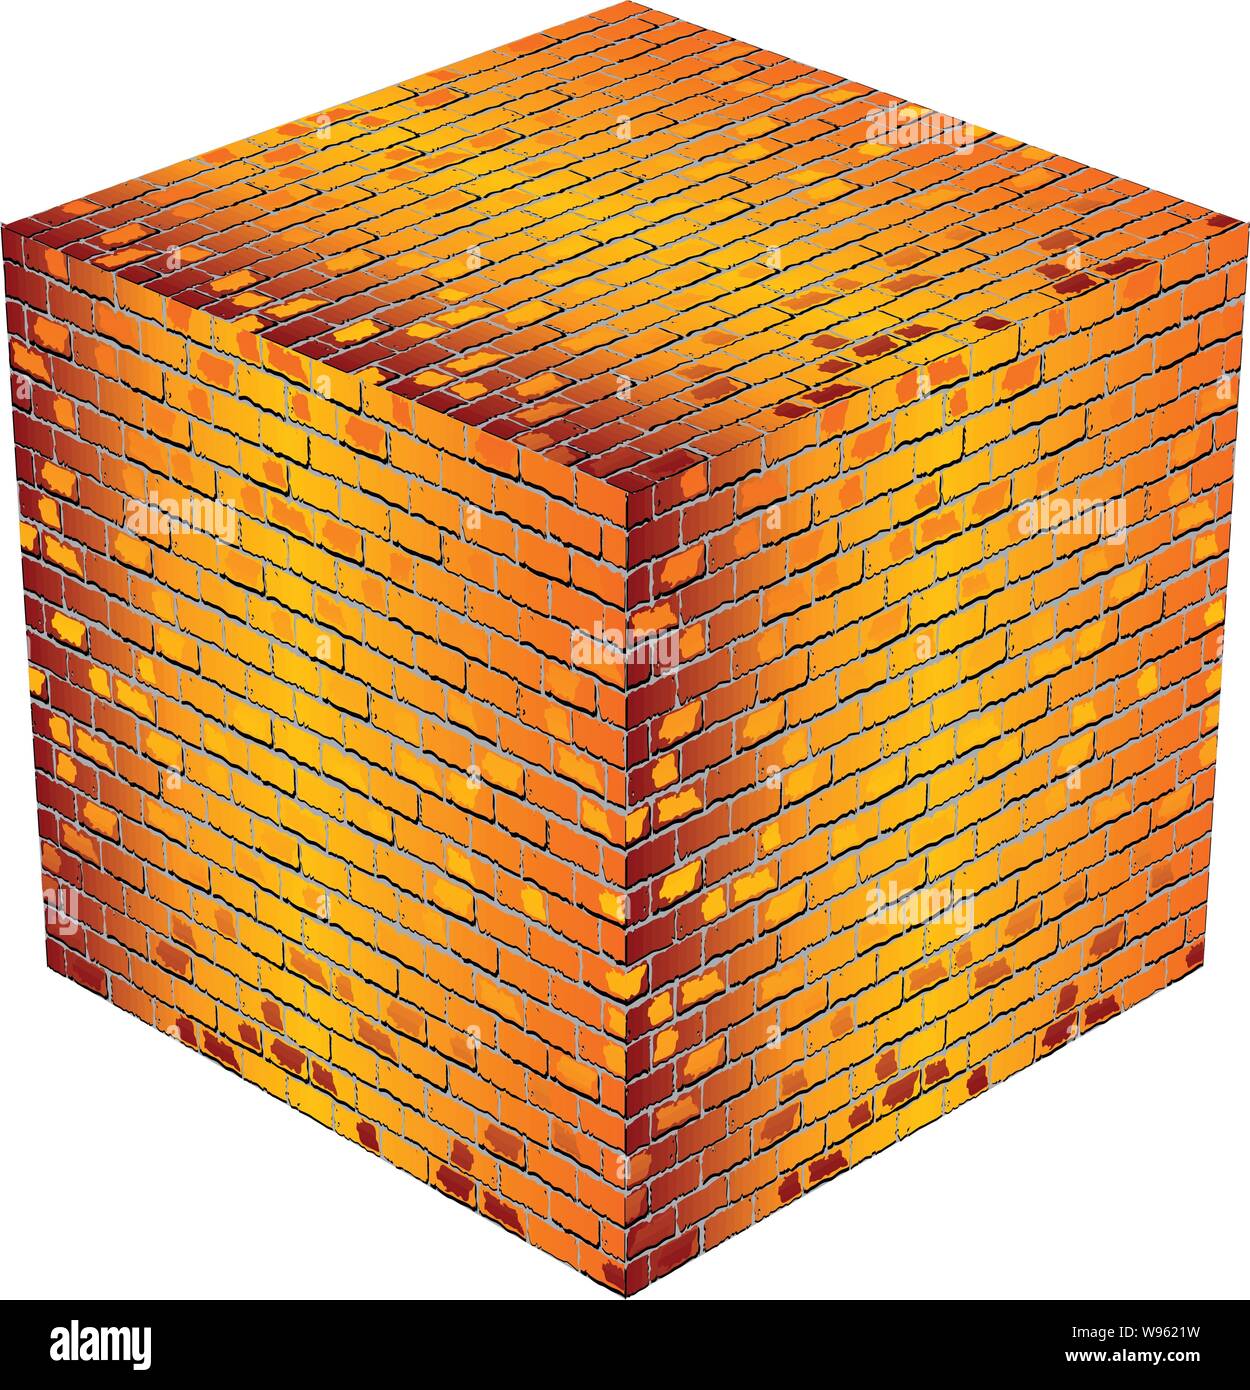 A cube made of orange bricks - Illustration,  Orange abstract vector illustration Stock Vector